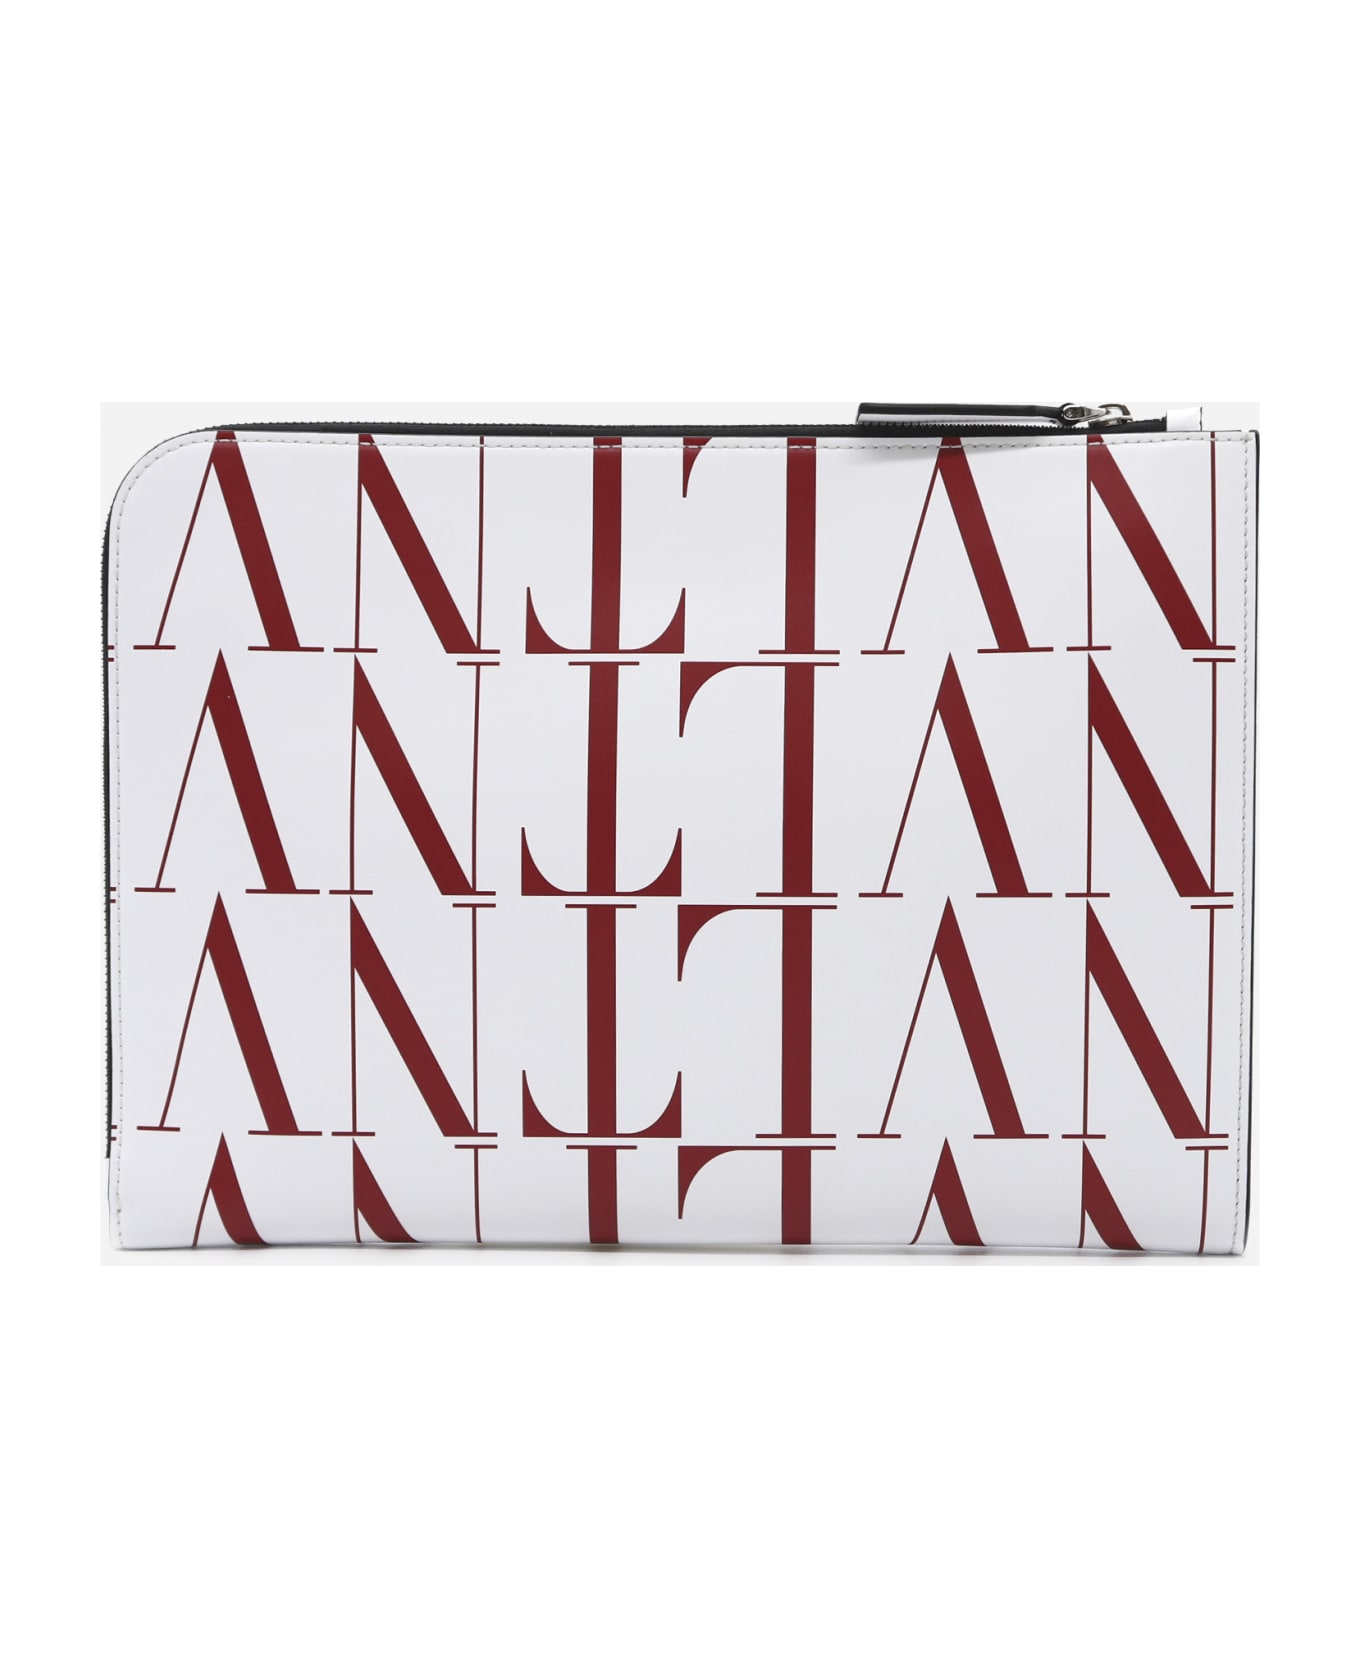 Valentino Garavani Leather Card Holder With All-over Vltn Logo - Bianco/rosso